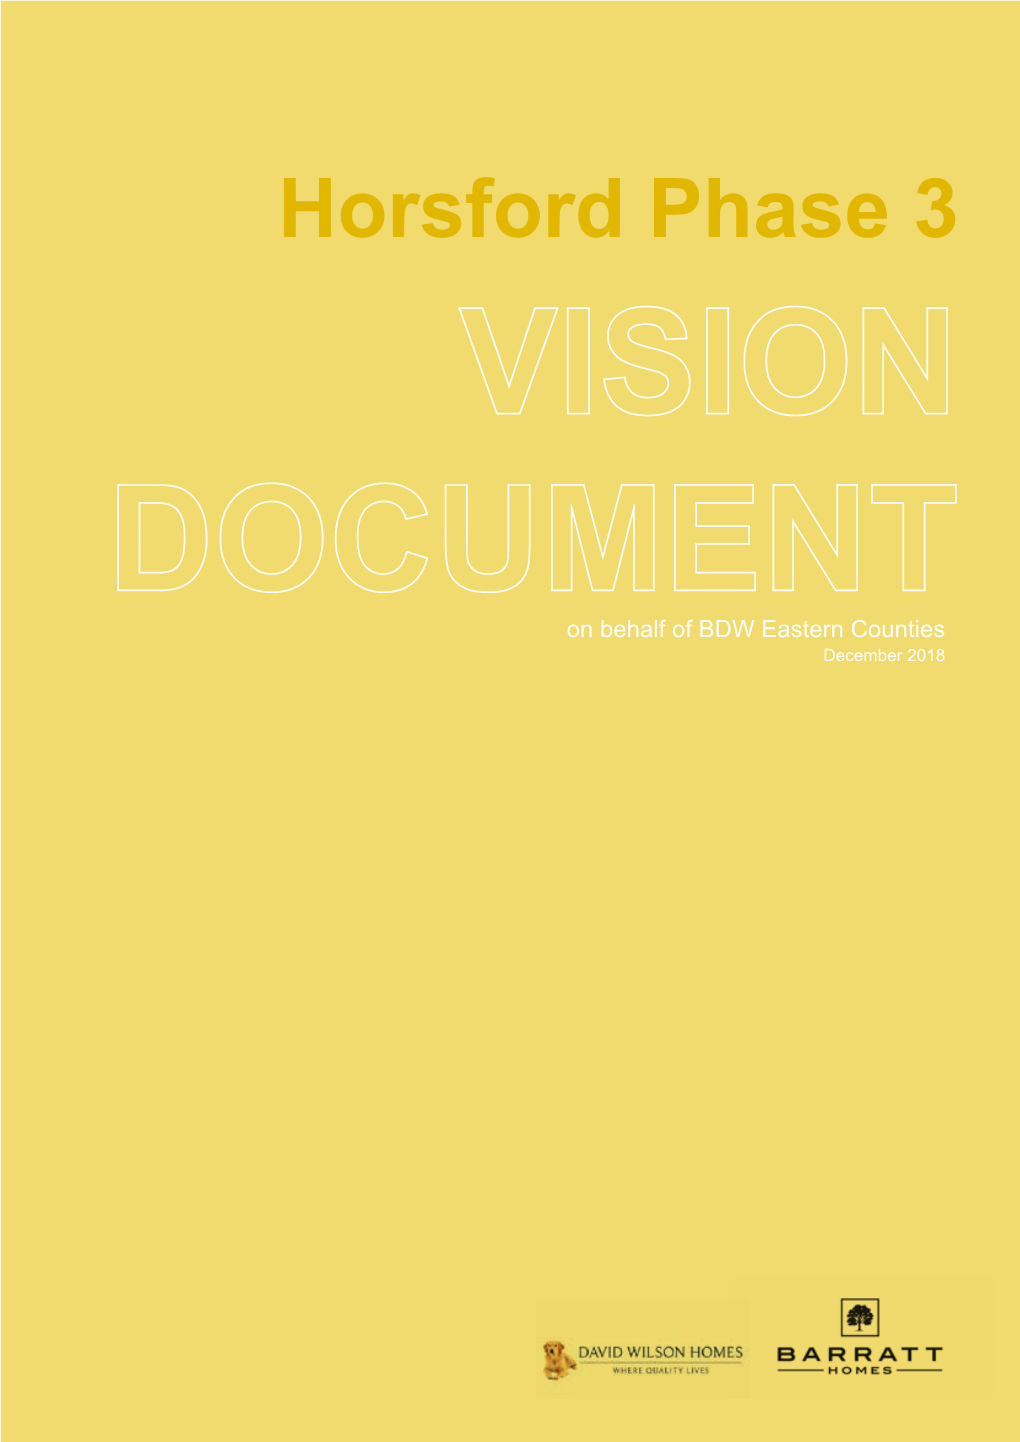 Horsford Phase 3